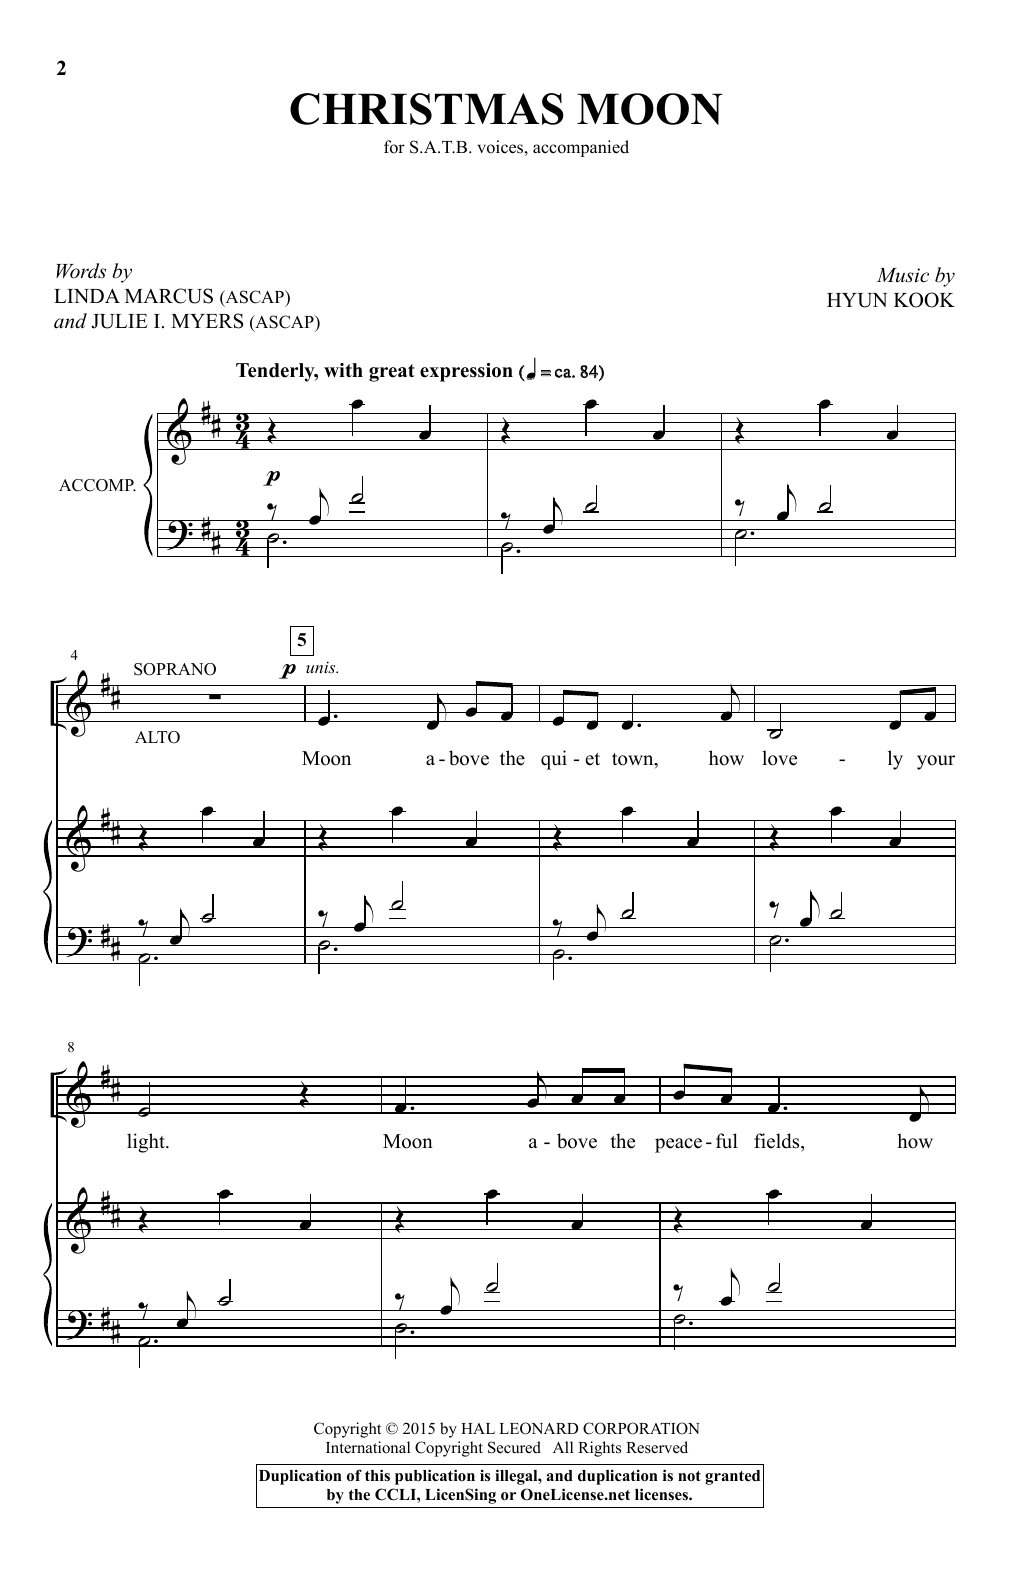 Hyun Kook Christmas Moon Sheet Music Notes & Chords for SATB - Download or Print PDF